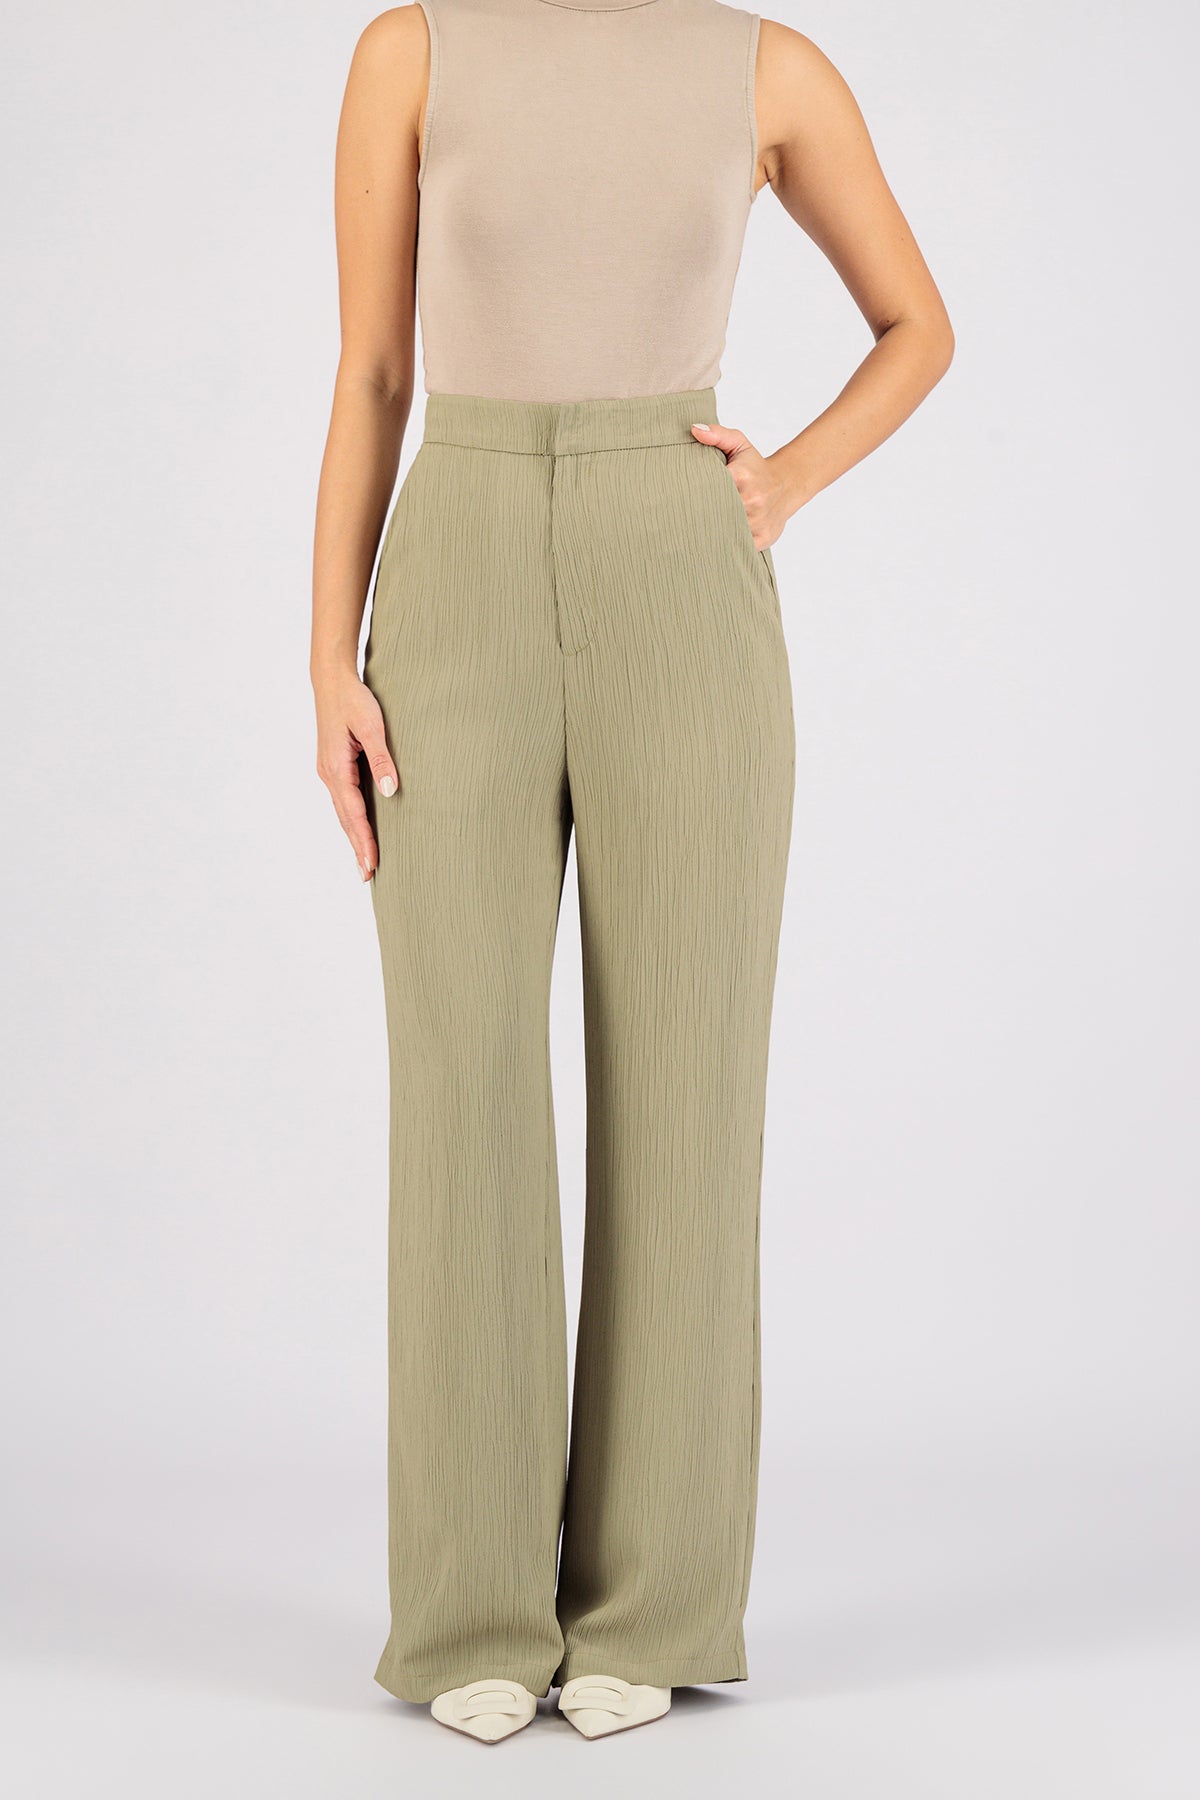 CA - Textured Dress Pants - Khaki Green